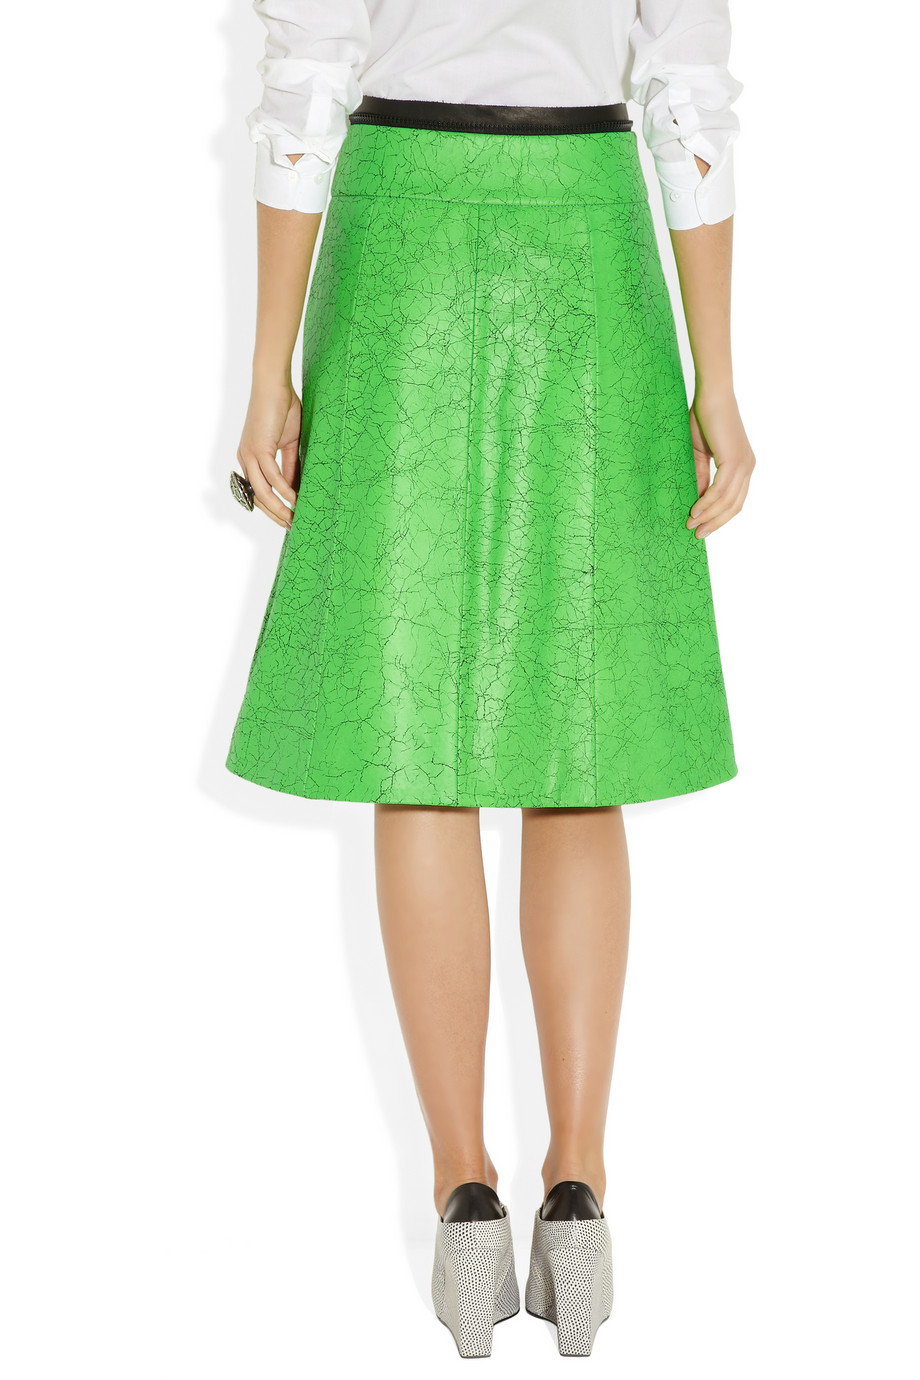 Lyst - Rag & bone Neon Cracked Leather Wrap Skirt in Green